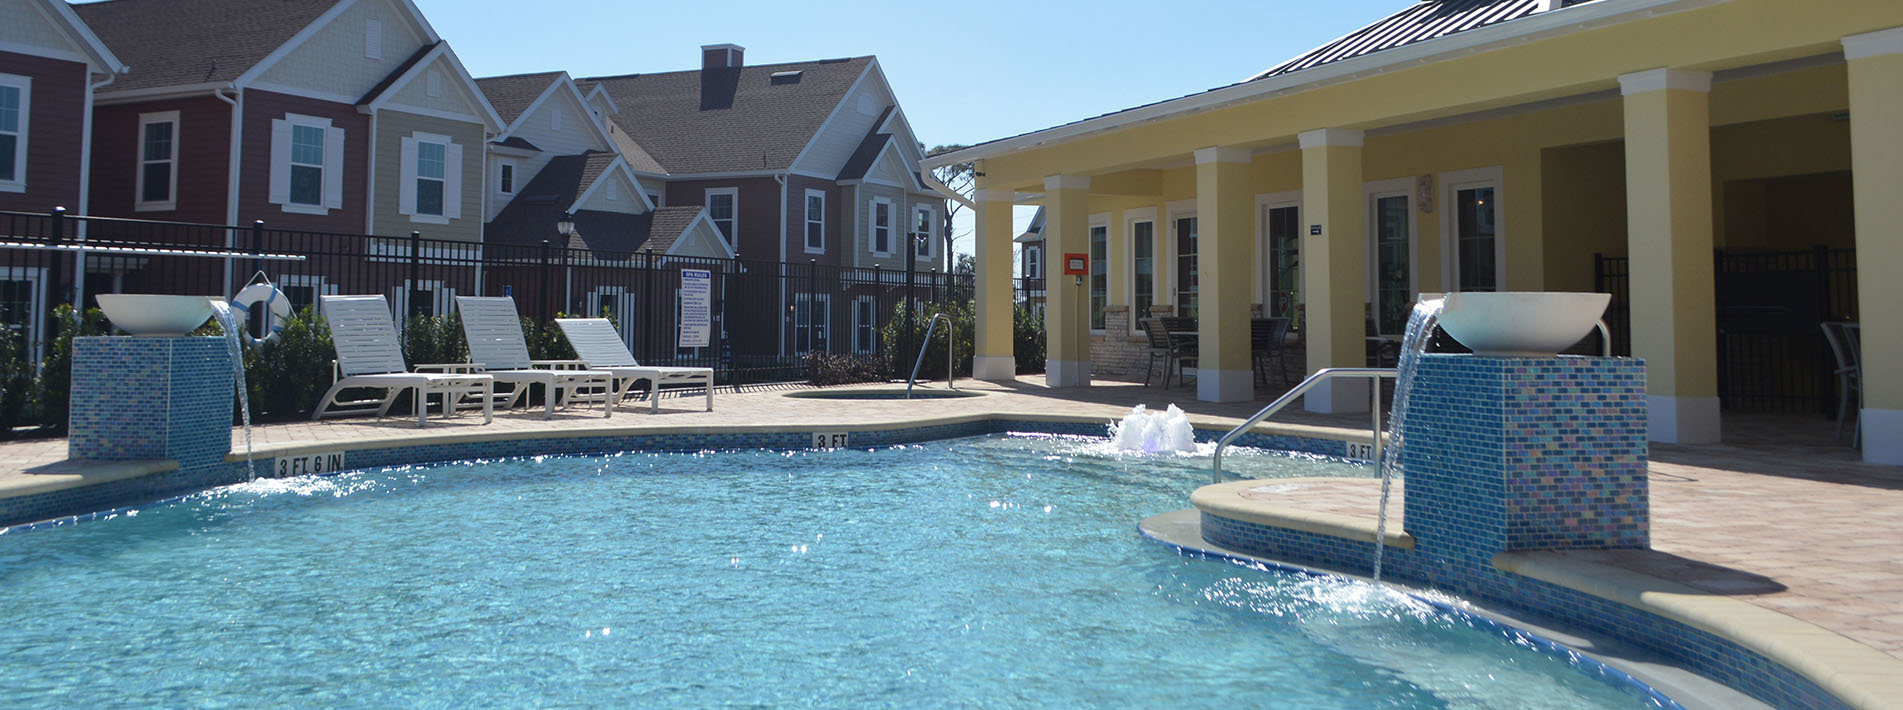 Summerville Resort Orlando Investment Property Pool